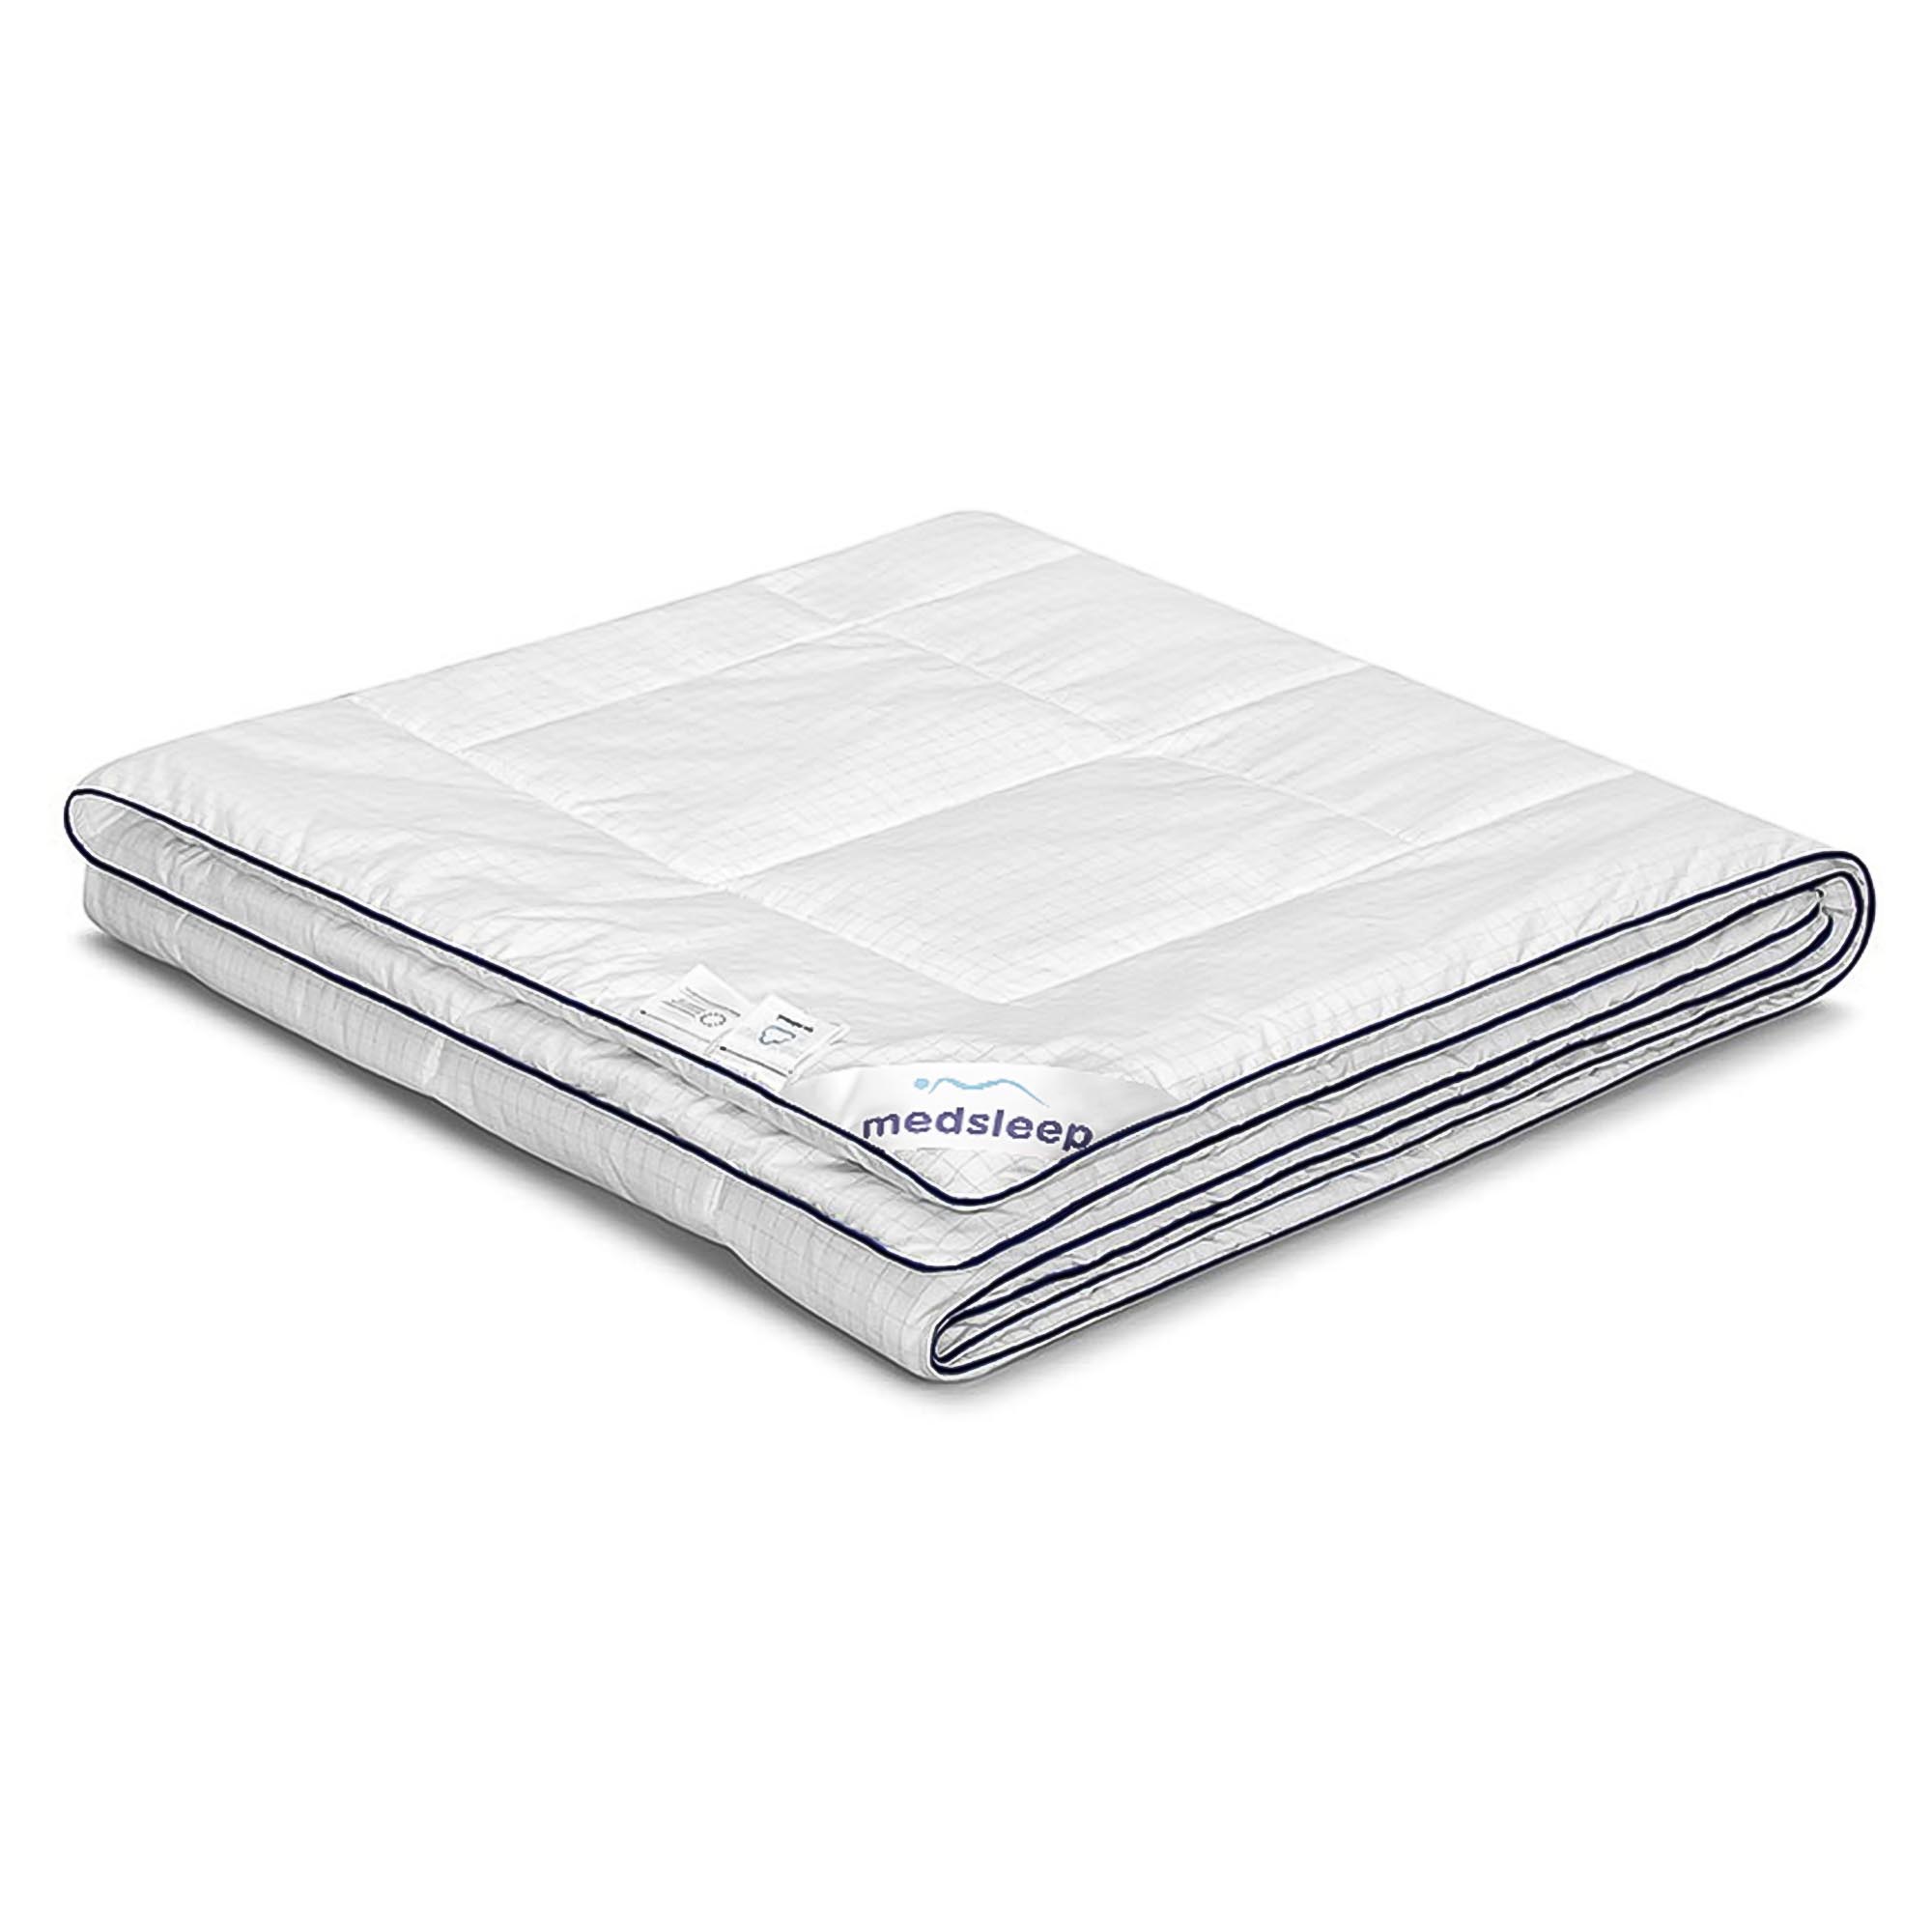 Одеяло Medsleep Nubi белое 200х210 см одеяло medsleep нотари белое 200х210 см